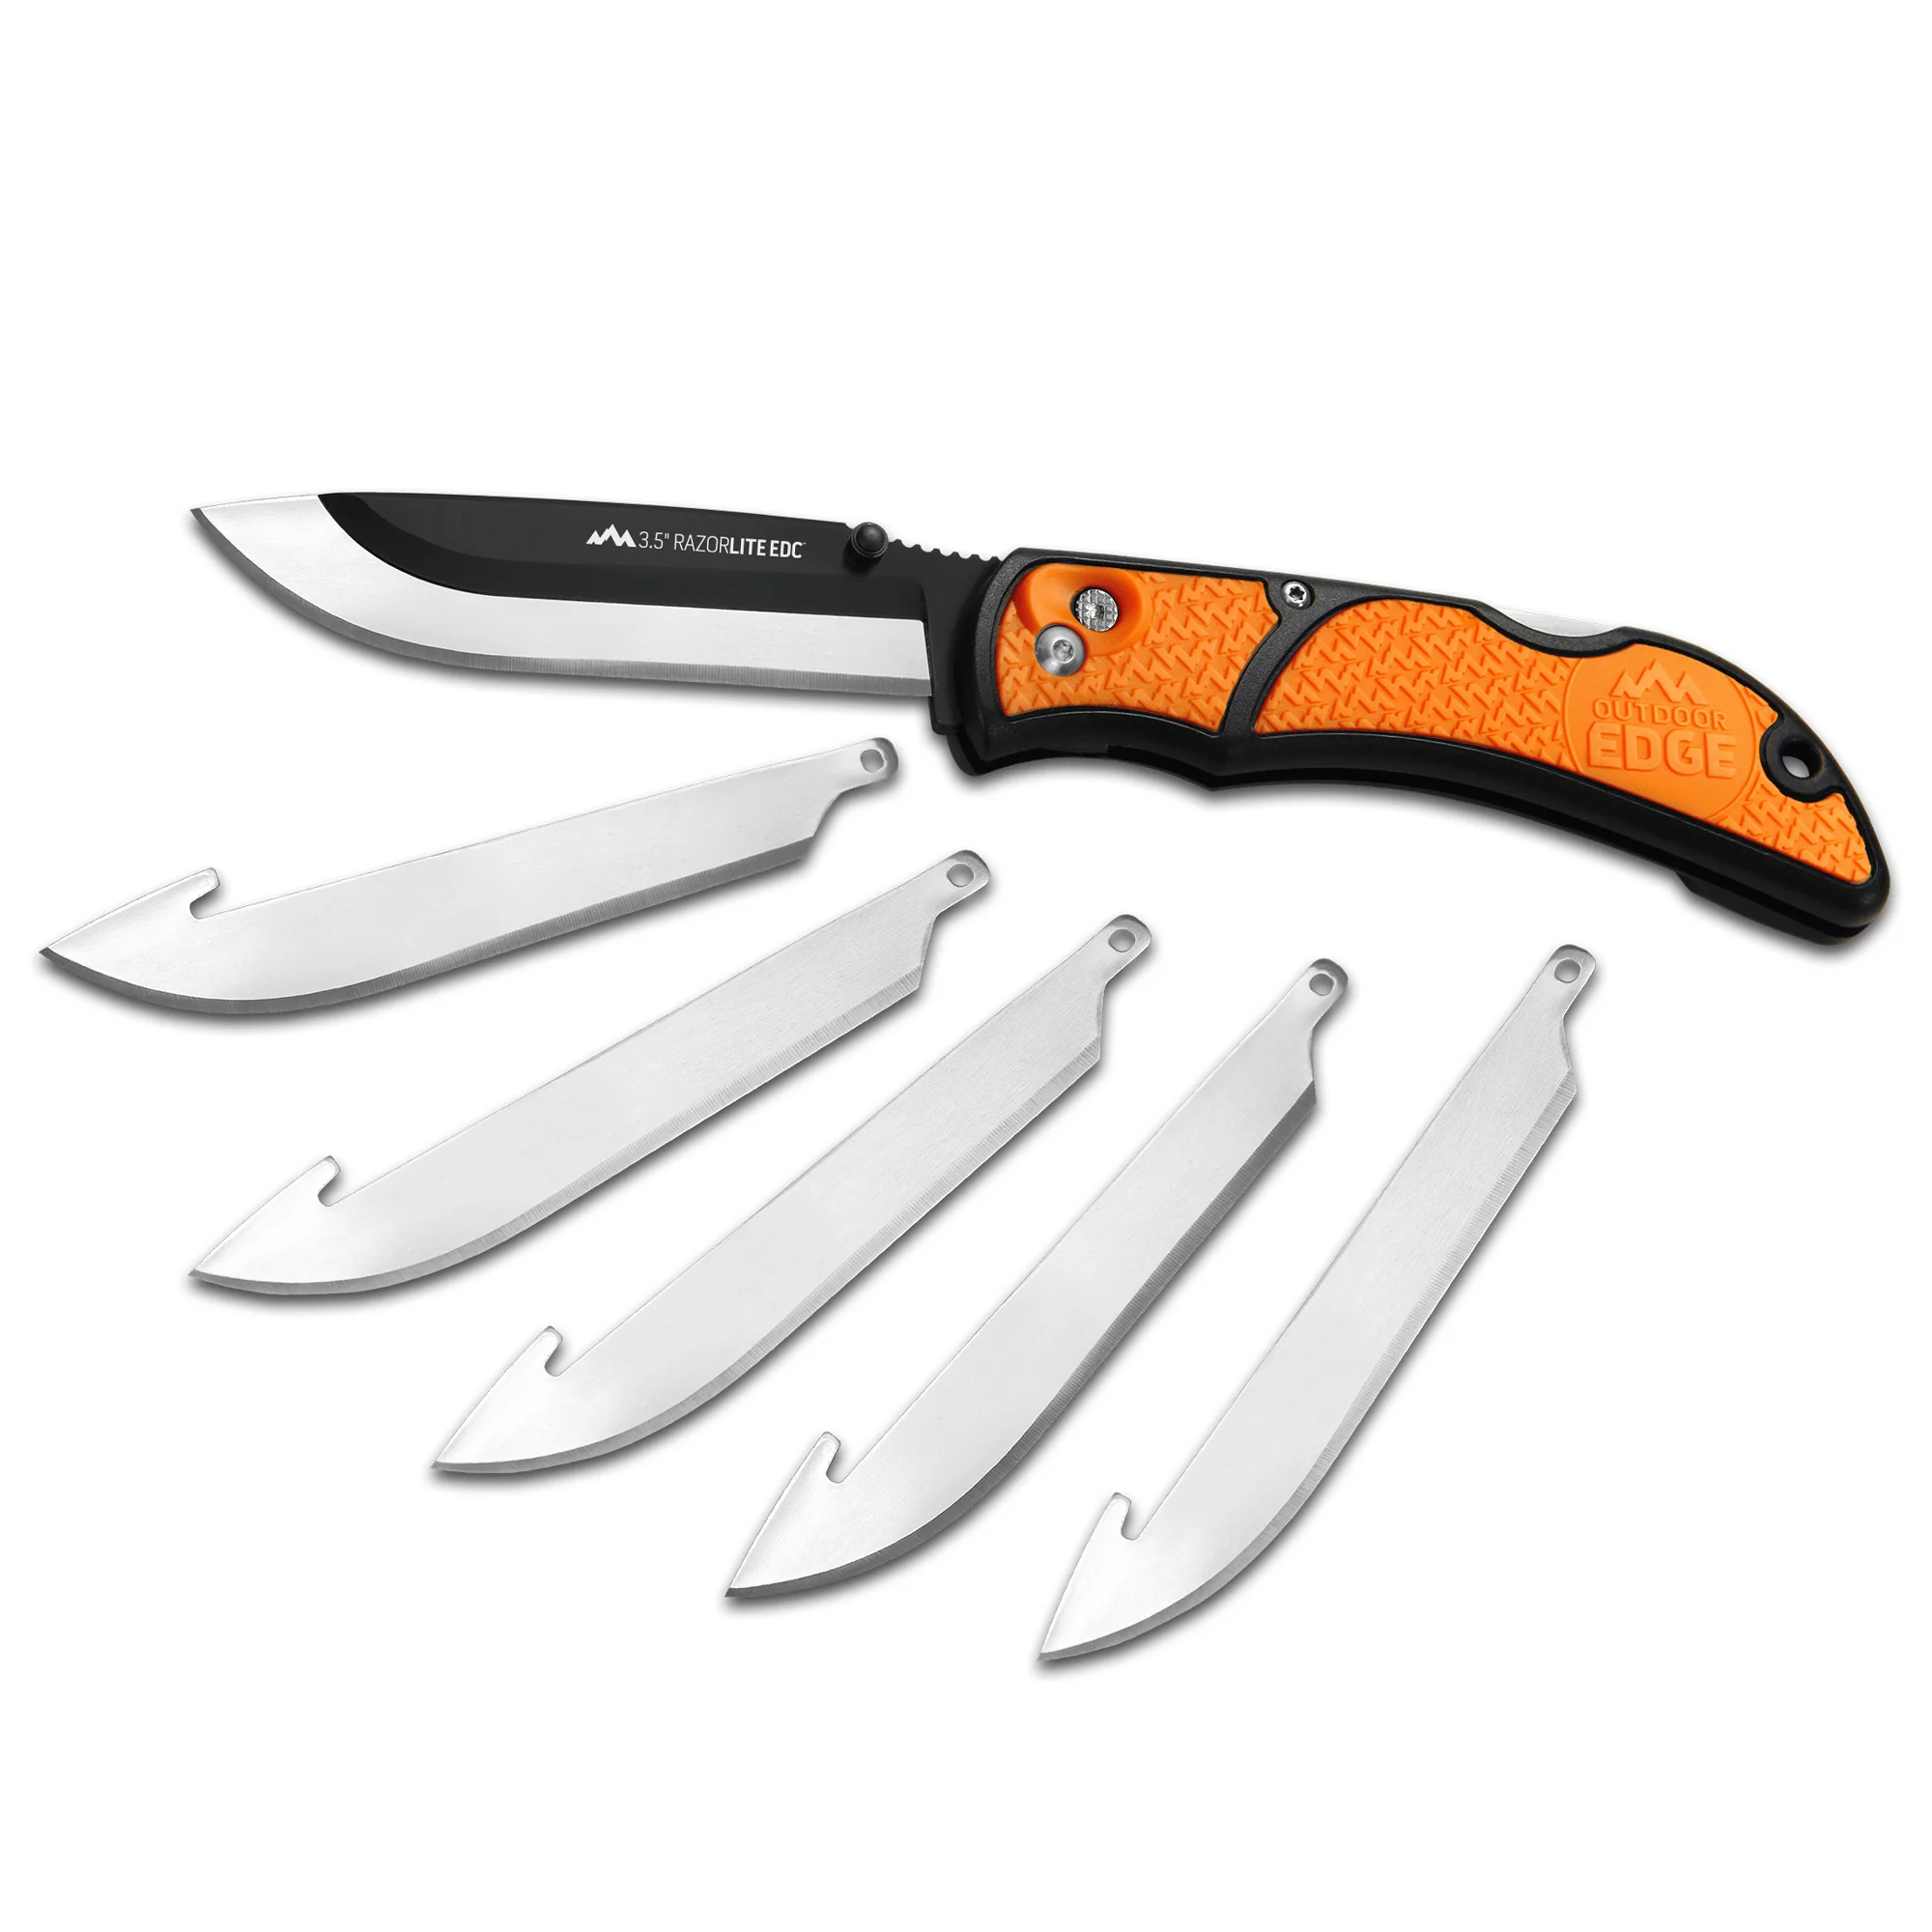 Outdoor Edge 3.5 RAZOR-PRO L (Orange, 6-Blades) RB-20C - Knives